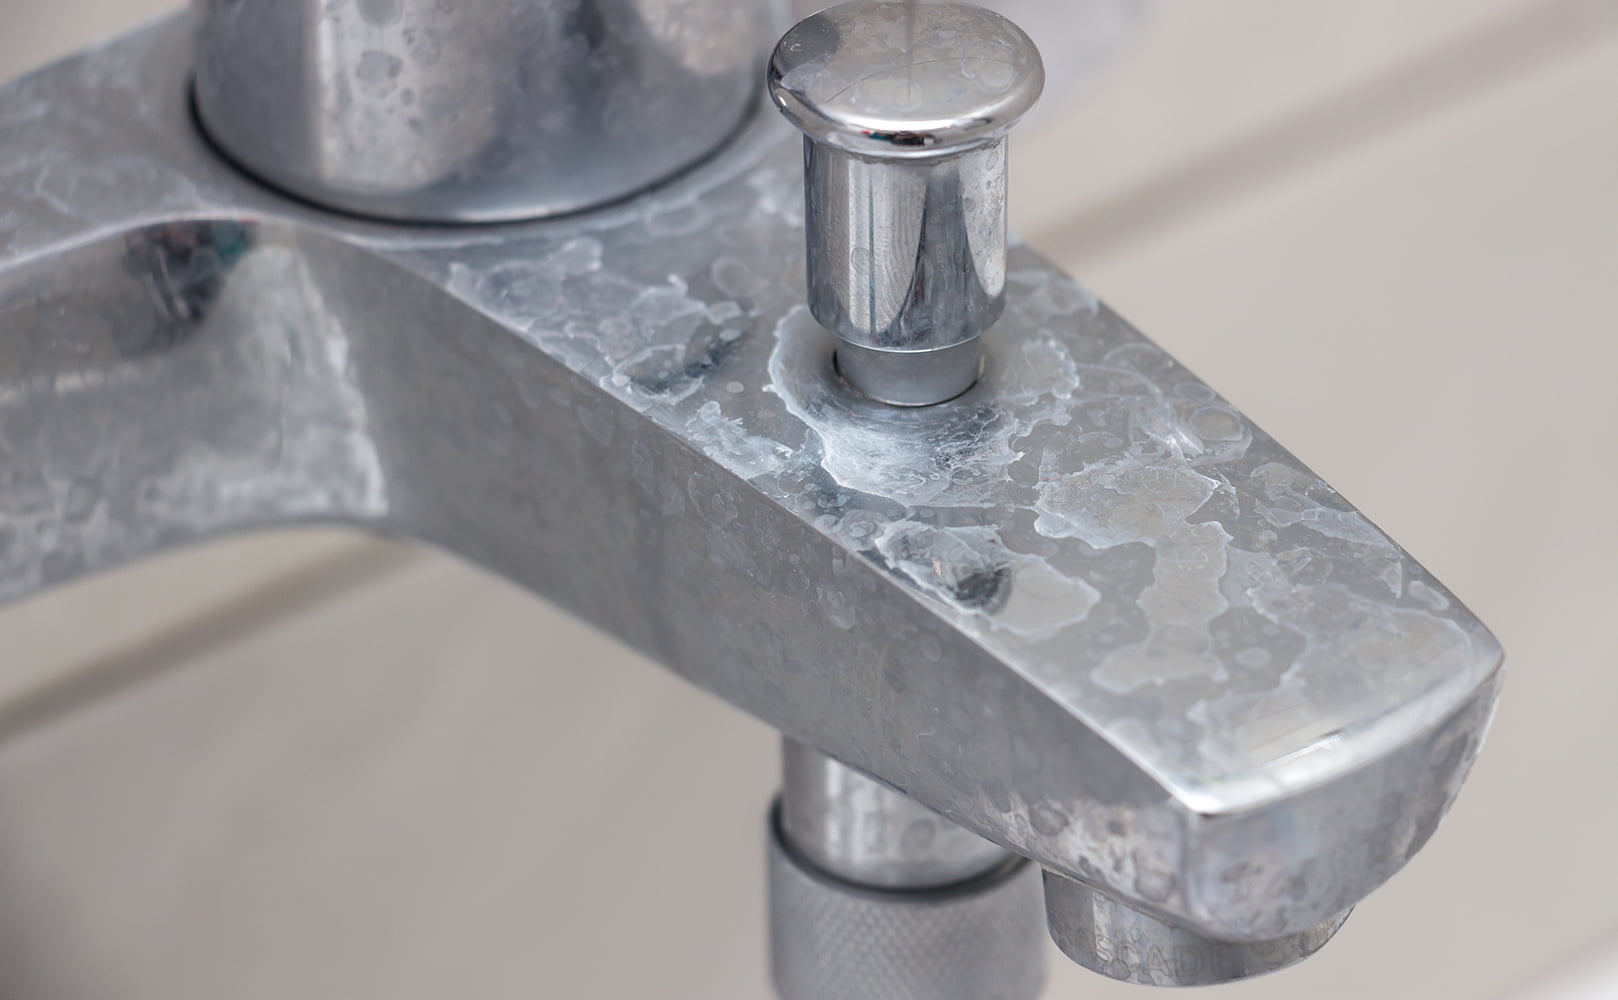 hard water scale on bathtub tap